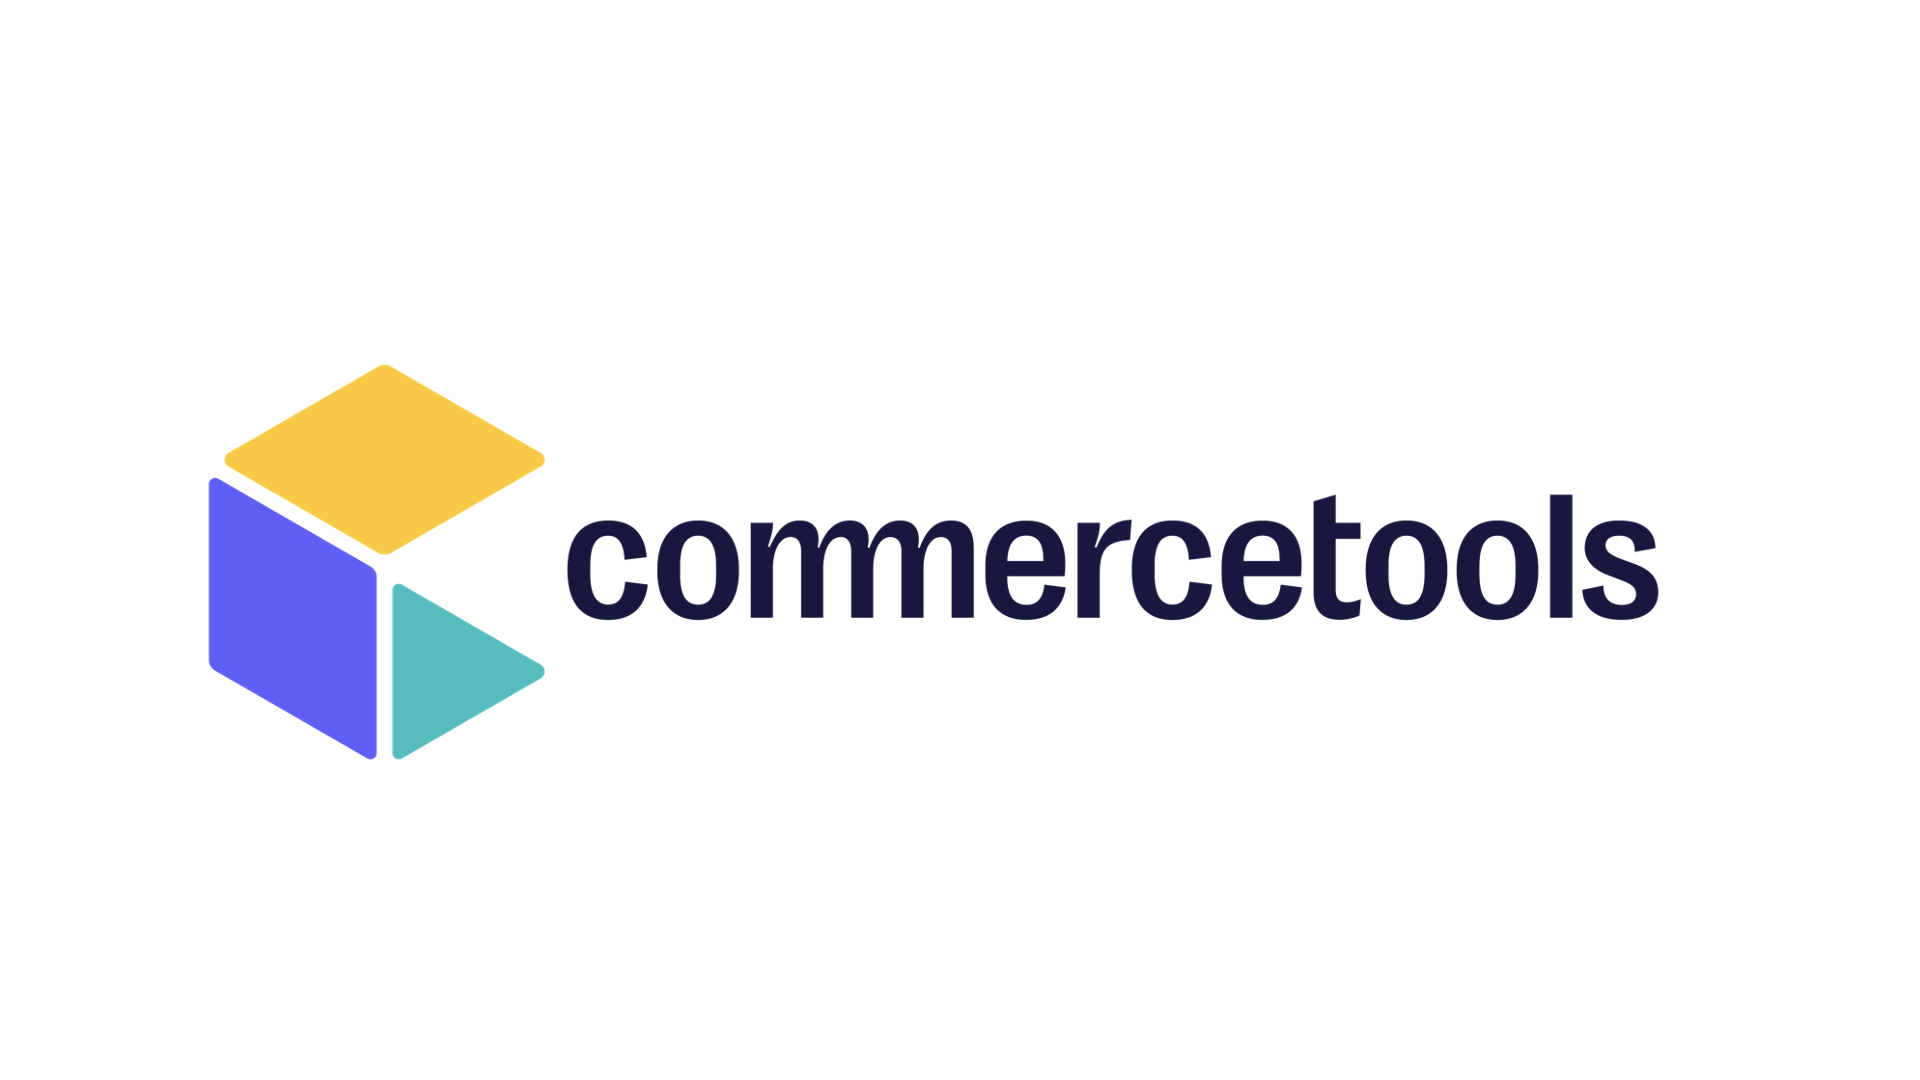 commercetools for e-commerce